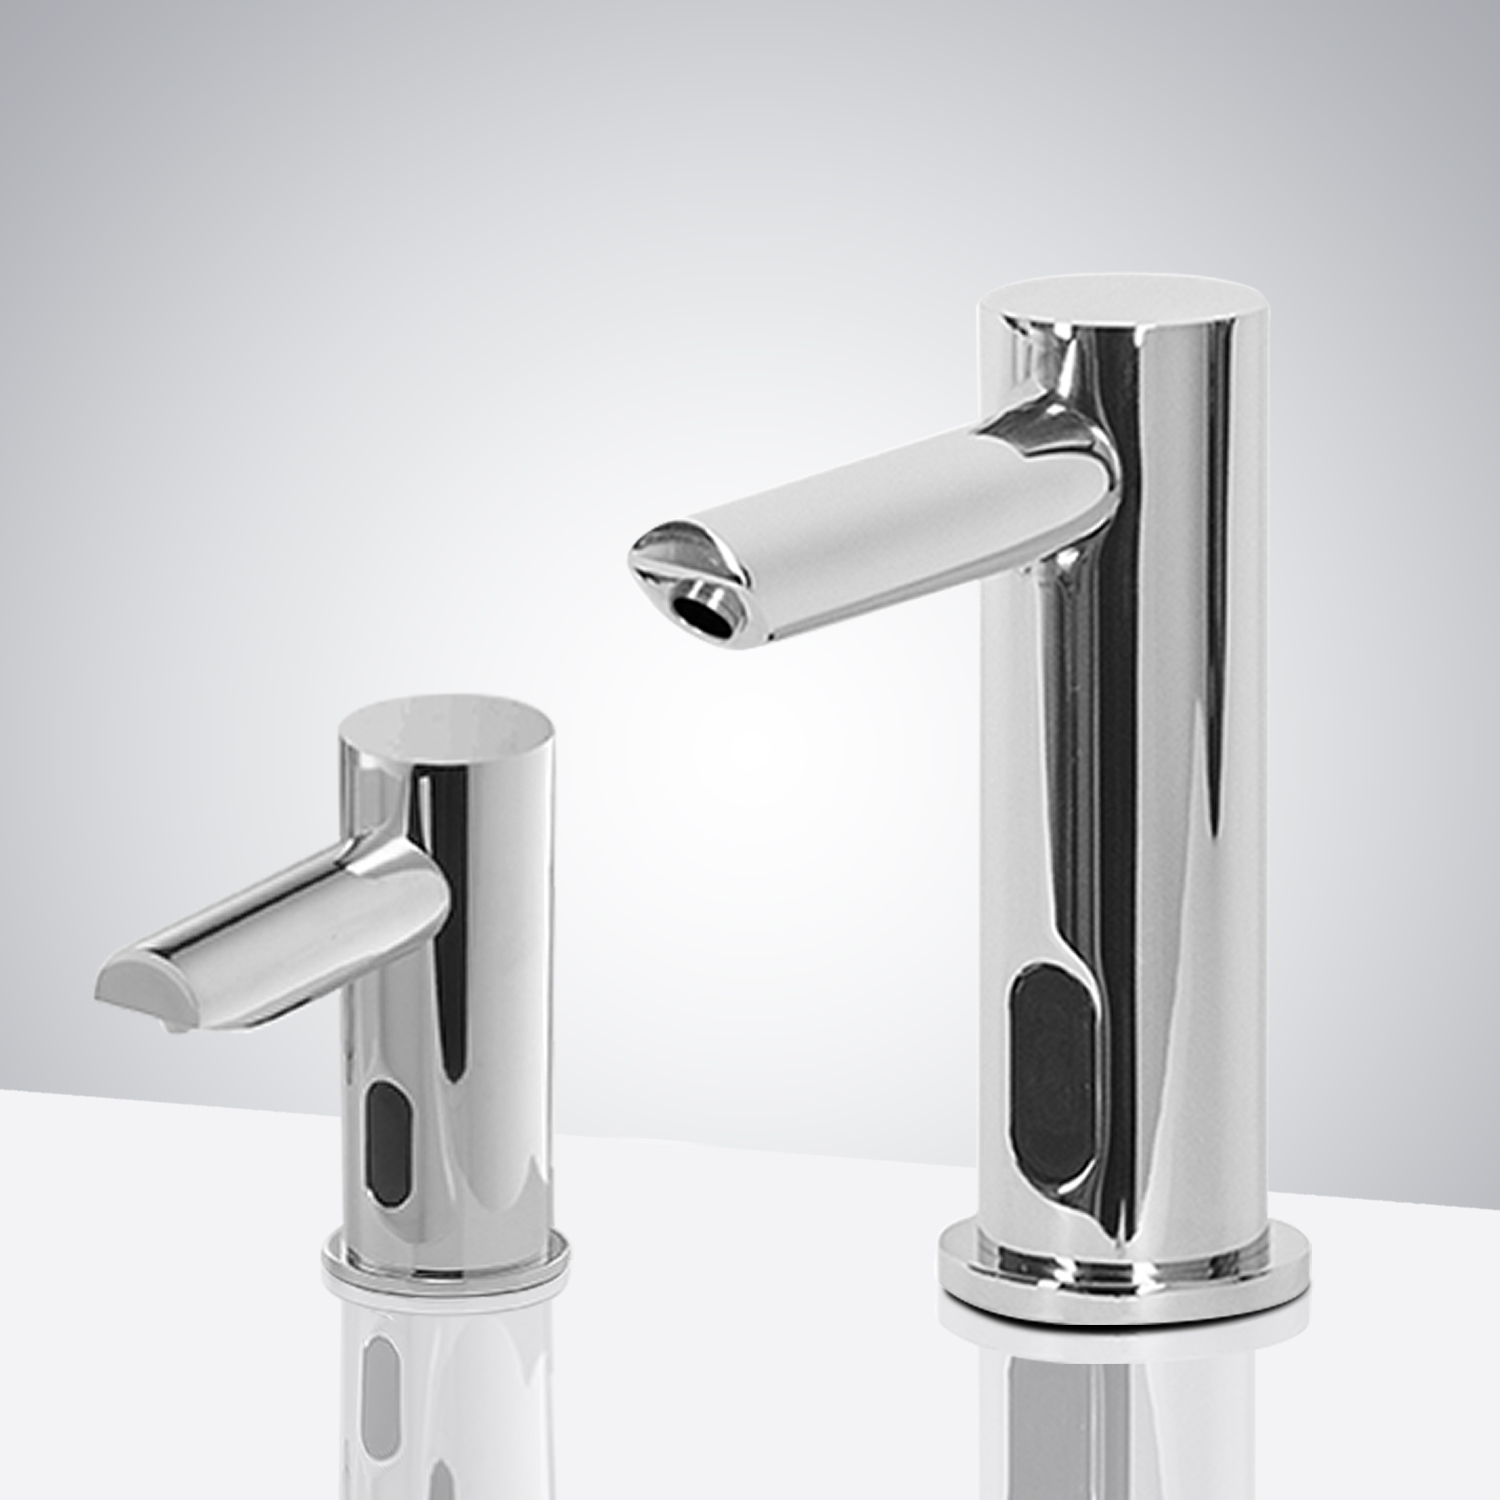 Fontana Carpi Chrome Motion Sensor Faucet & Touch Free Automatic Wall Mount Soap Dispenser for Restrooms